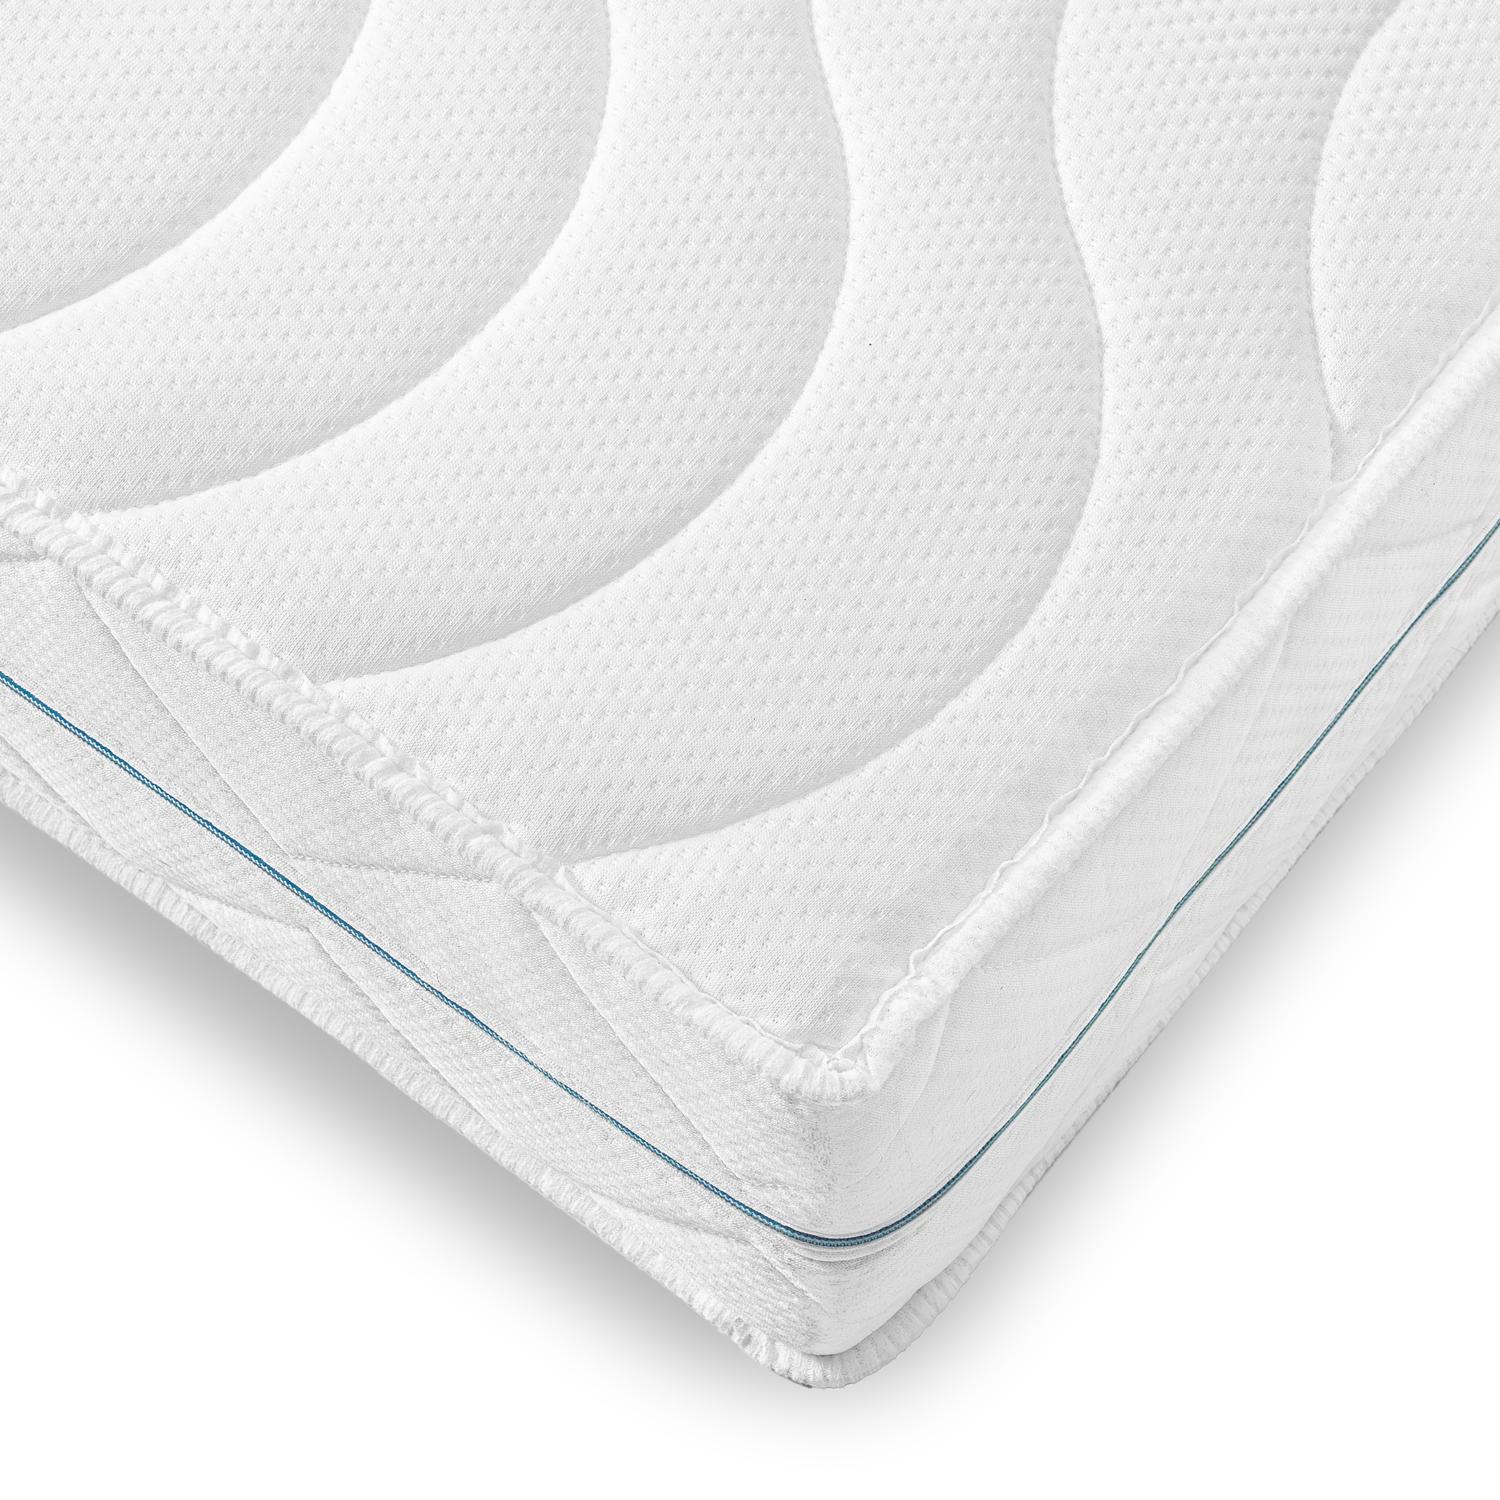 Supportho Premium mattress cover 140 x 200 cm, height 18 cm